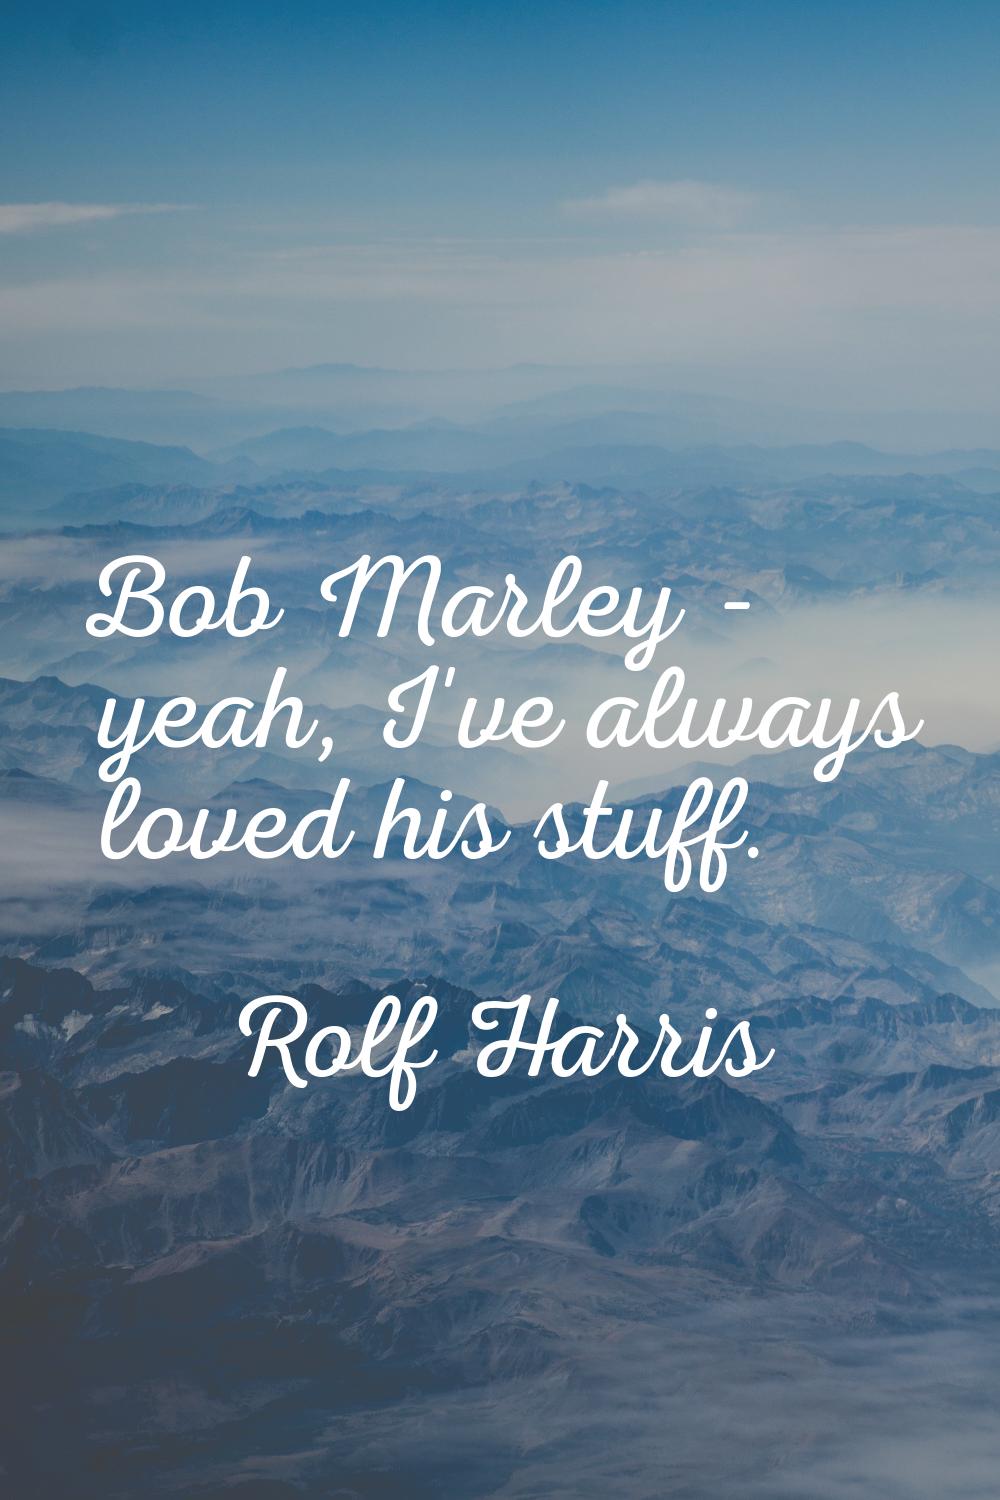 Bob Marley - yeah, I've always loved his stuff.